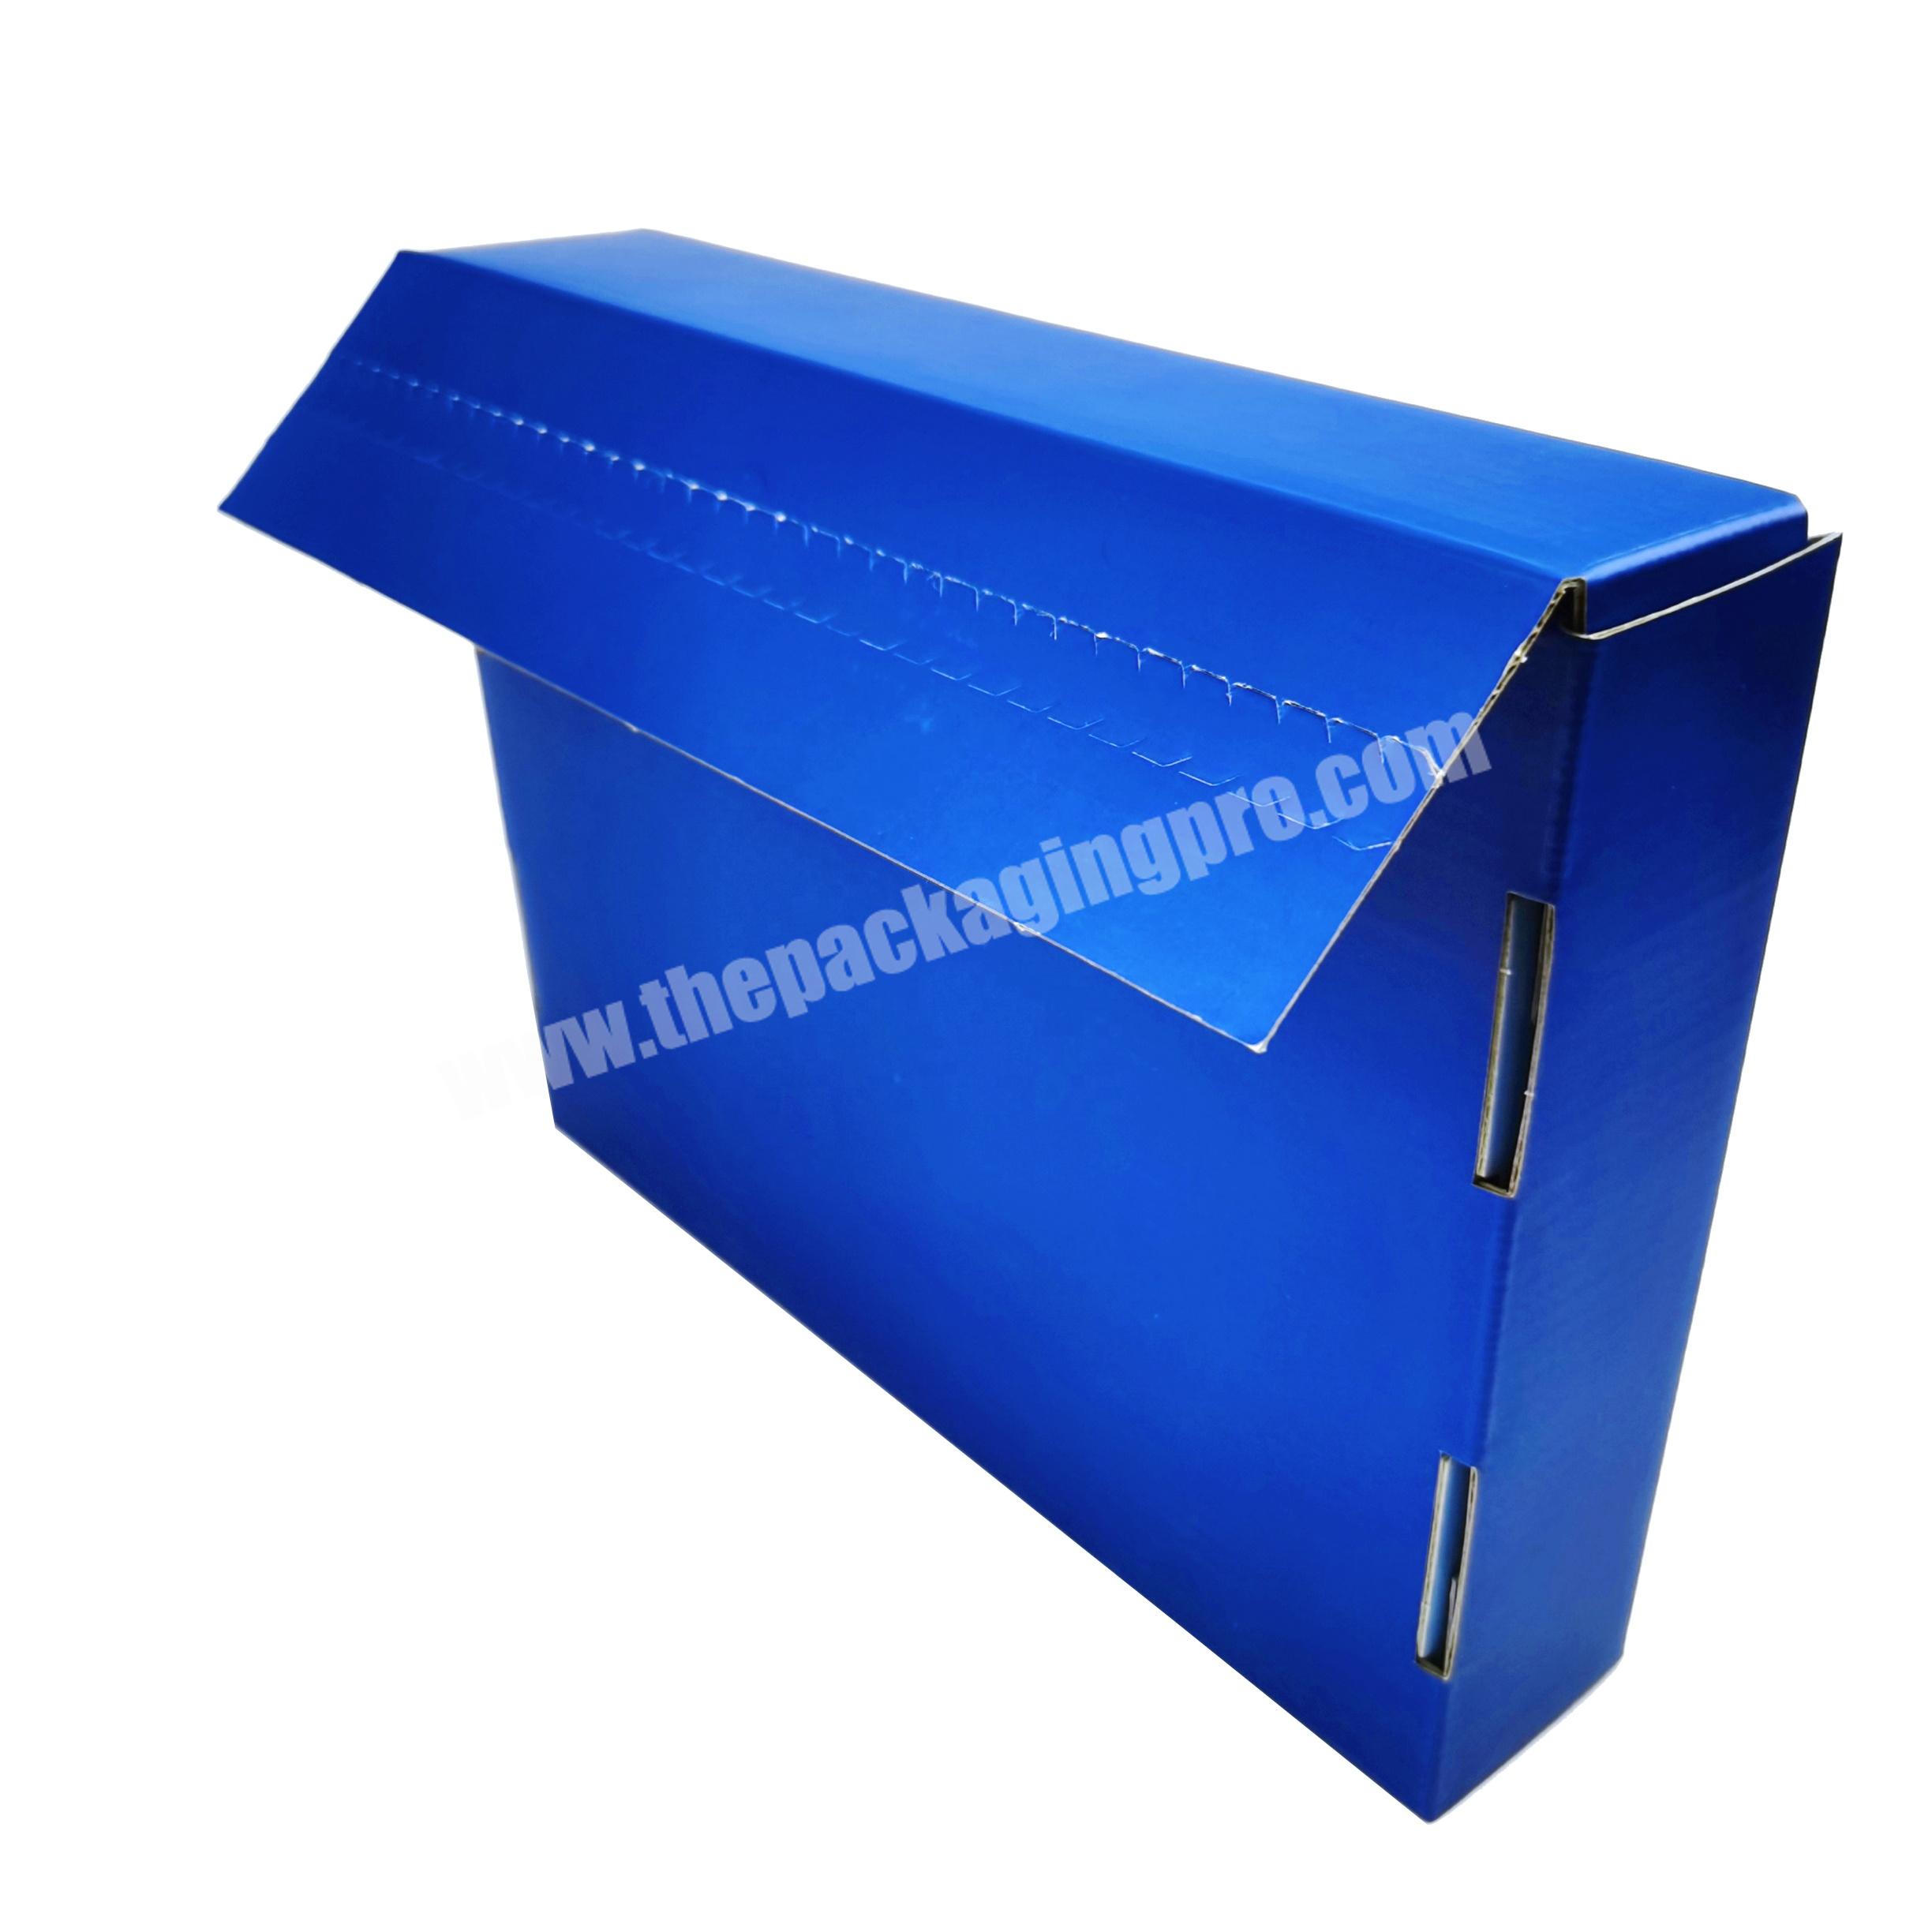 SENCAI Blue Corrugated Paper Shipping Box With Self-Adhesive Tear Line